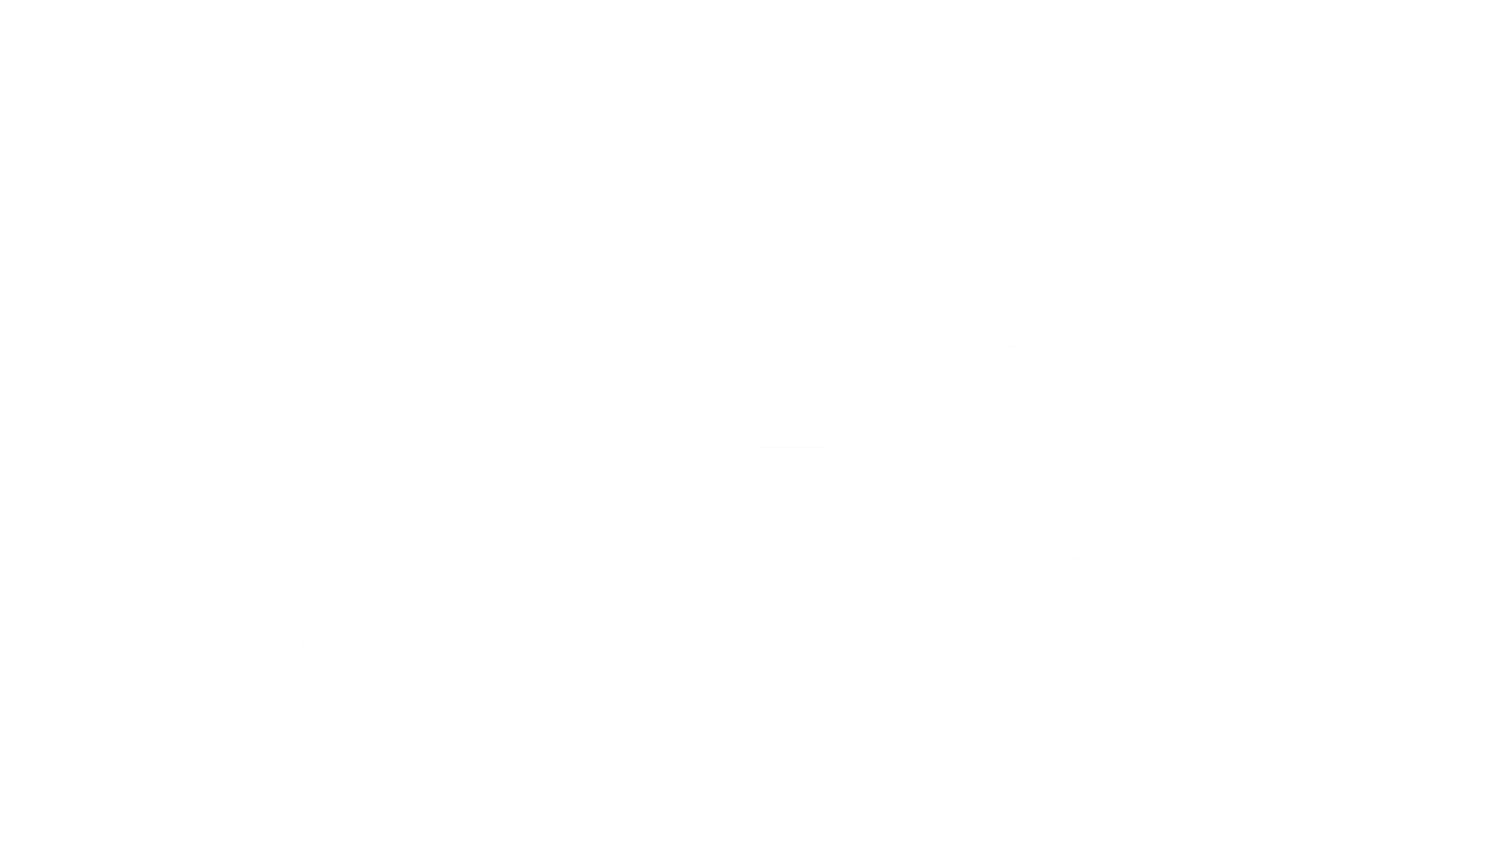 Charles J. O'Shea Funeral Home